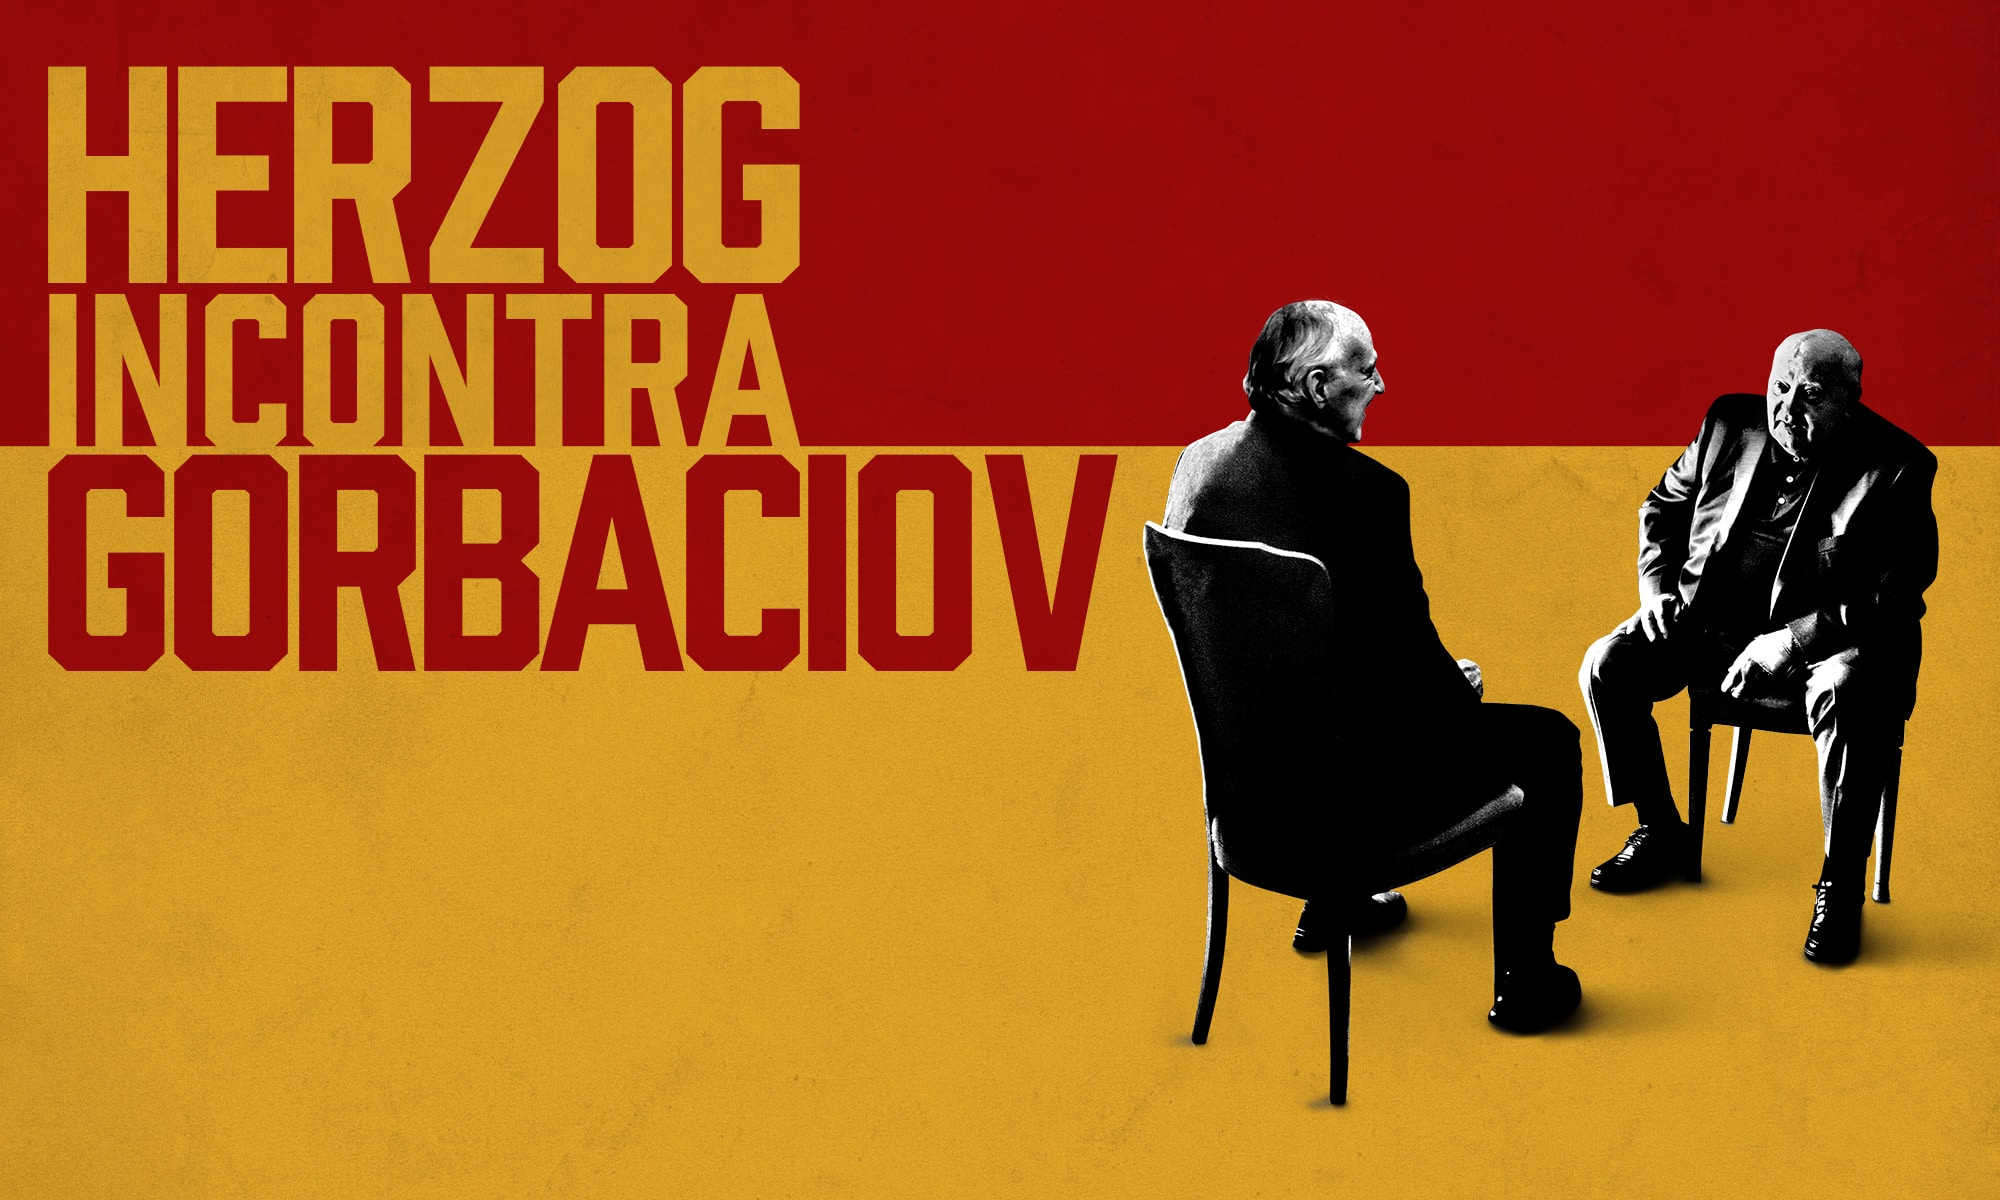 Herzog incontra Gorbaciov: recensione del film documentario